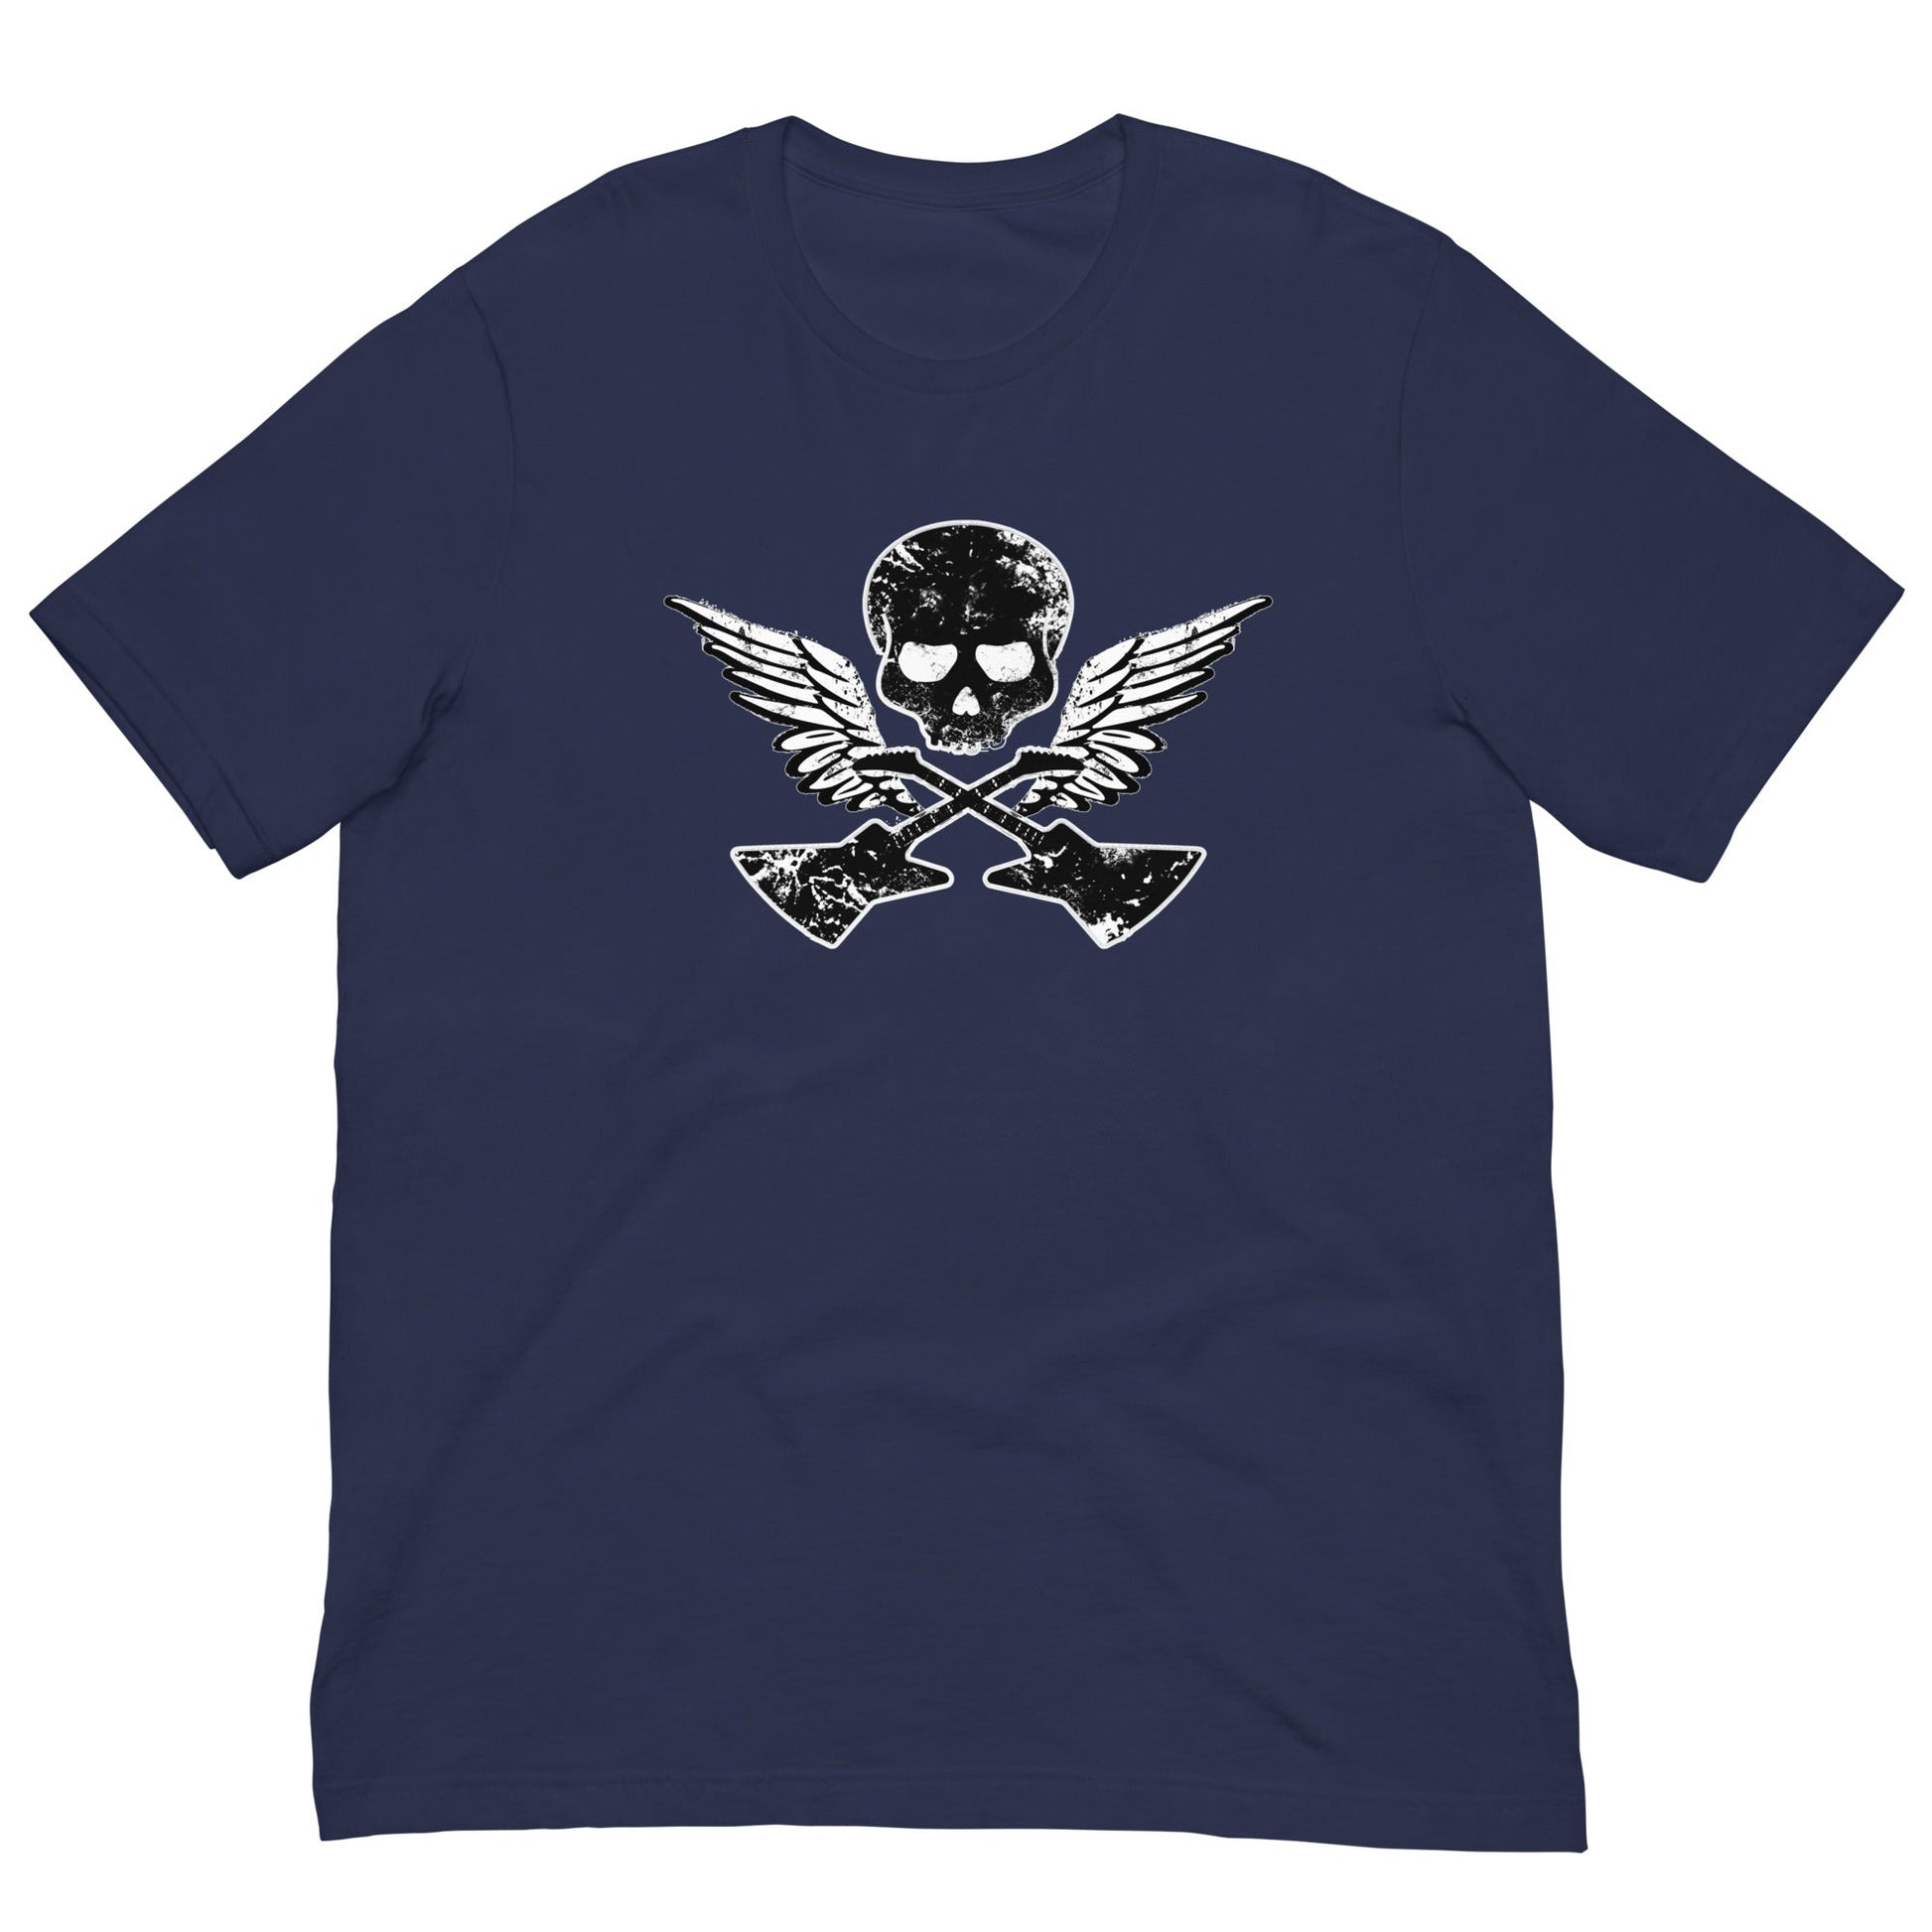 Scar Design T shirt Navy / XS Skull Guitar Wings T-shirt